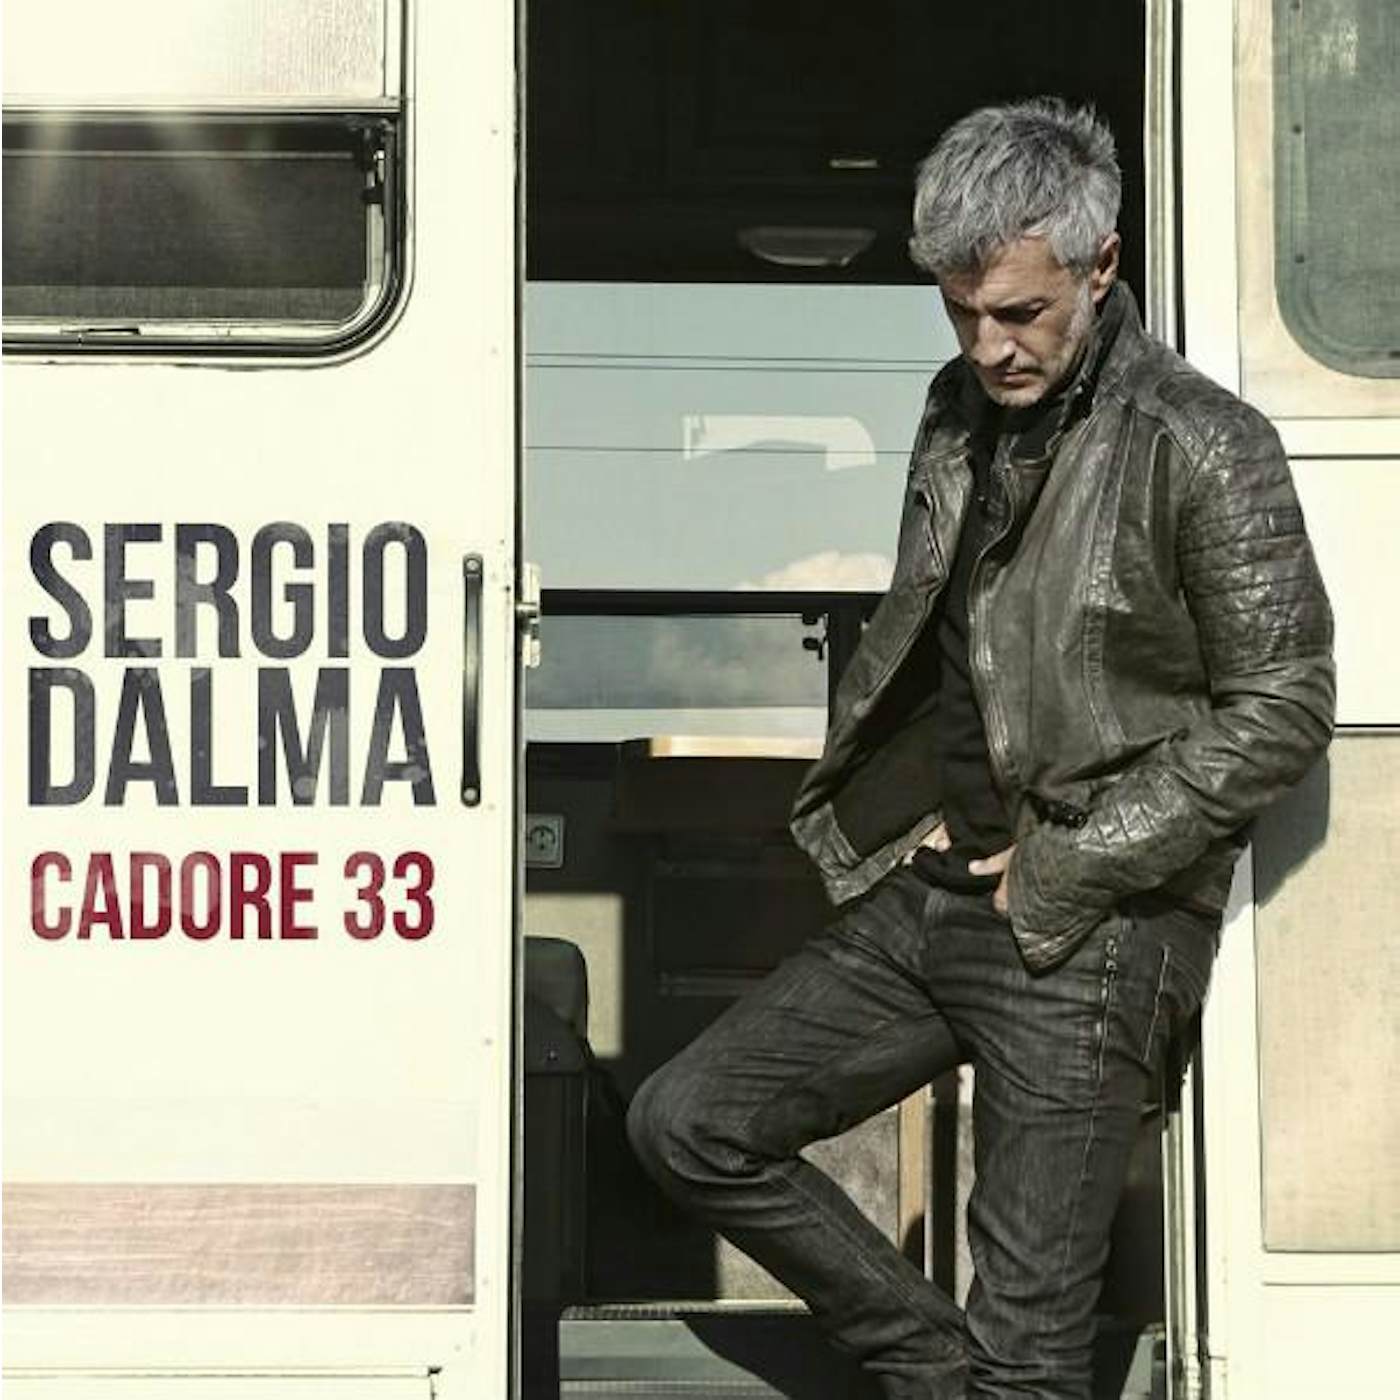 Sergio Dalma CADORE 33 / DALMA CD